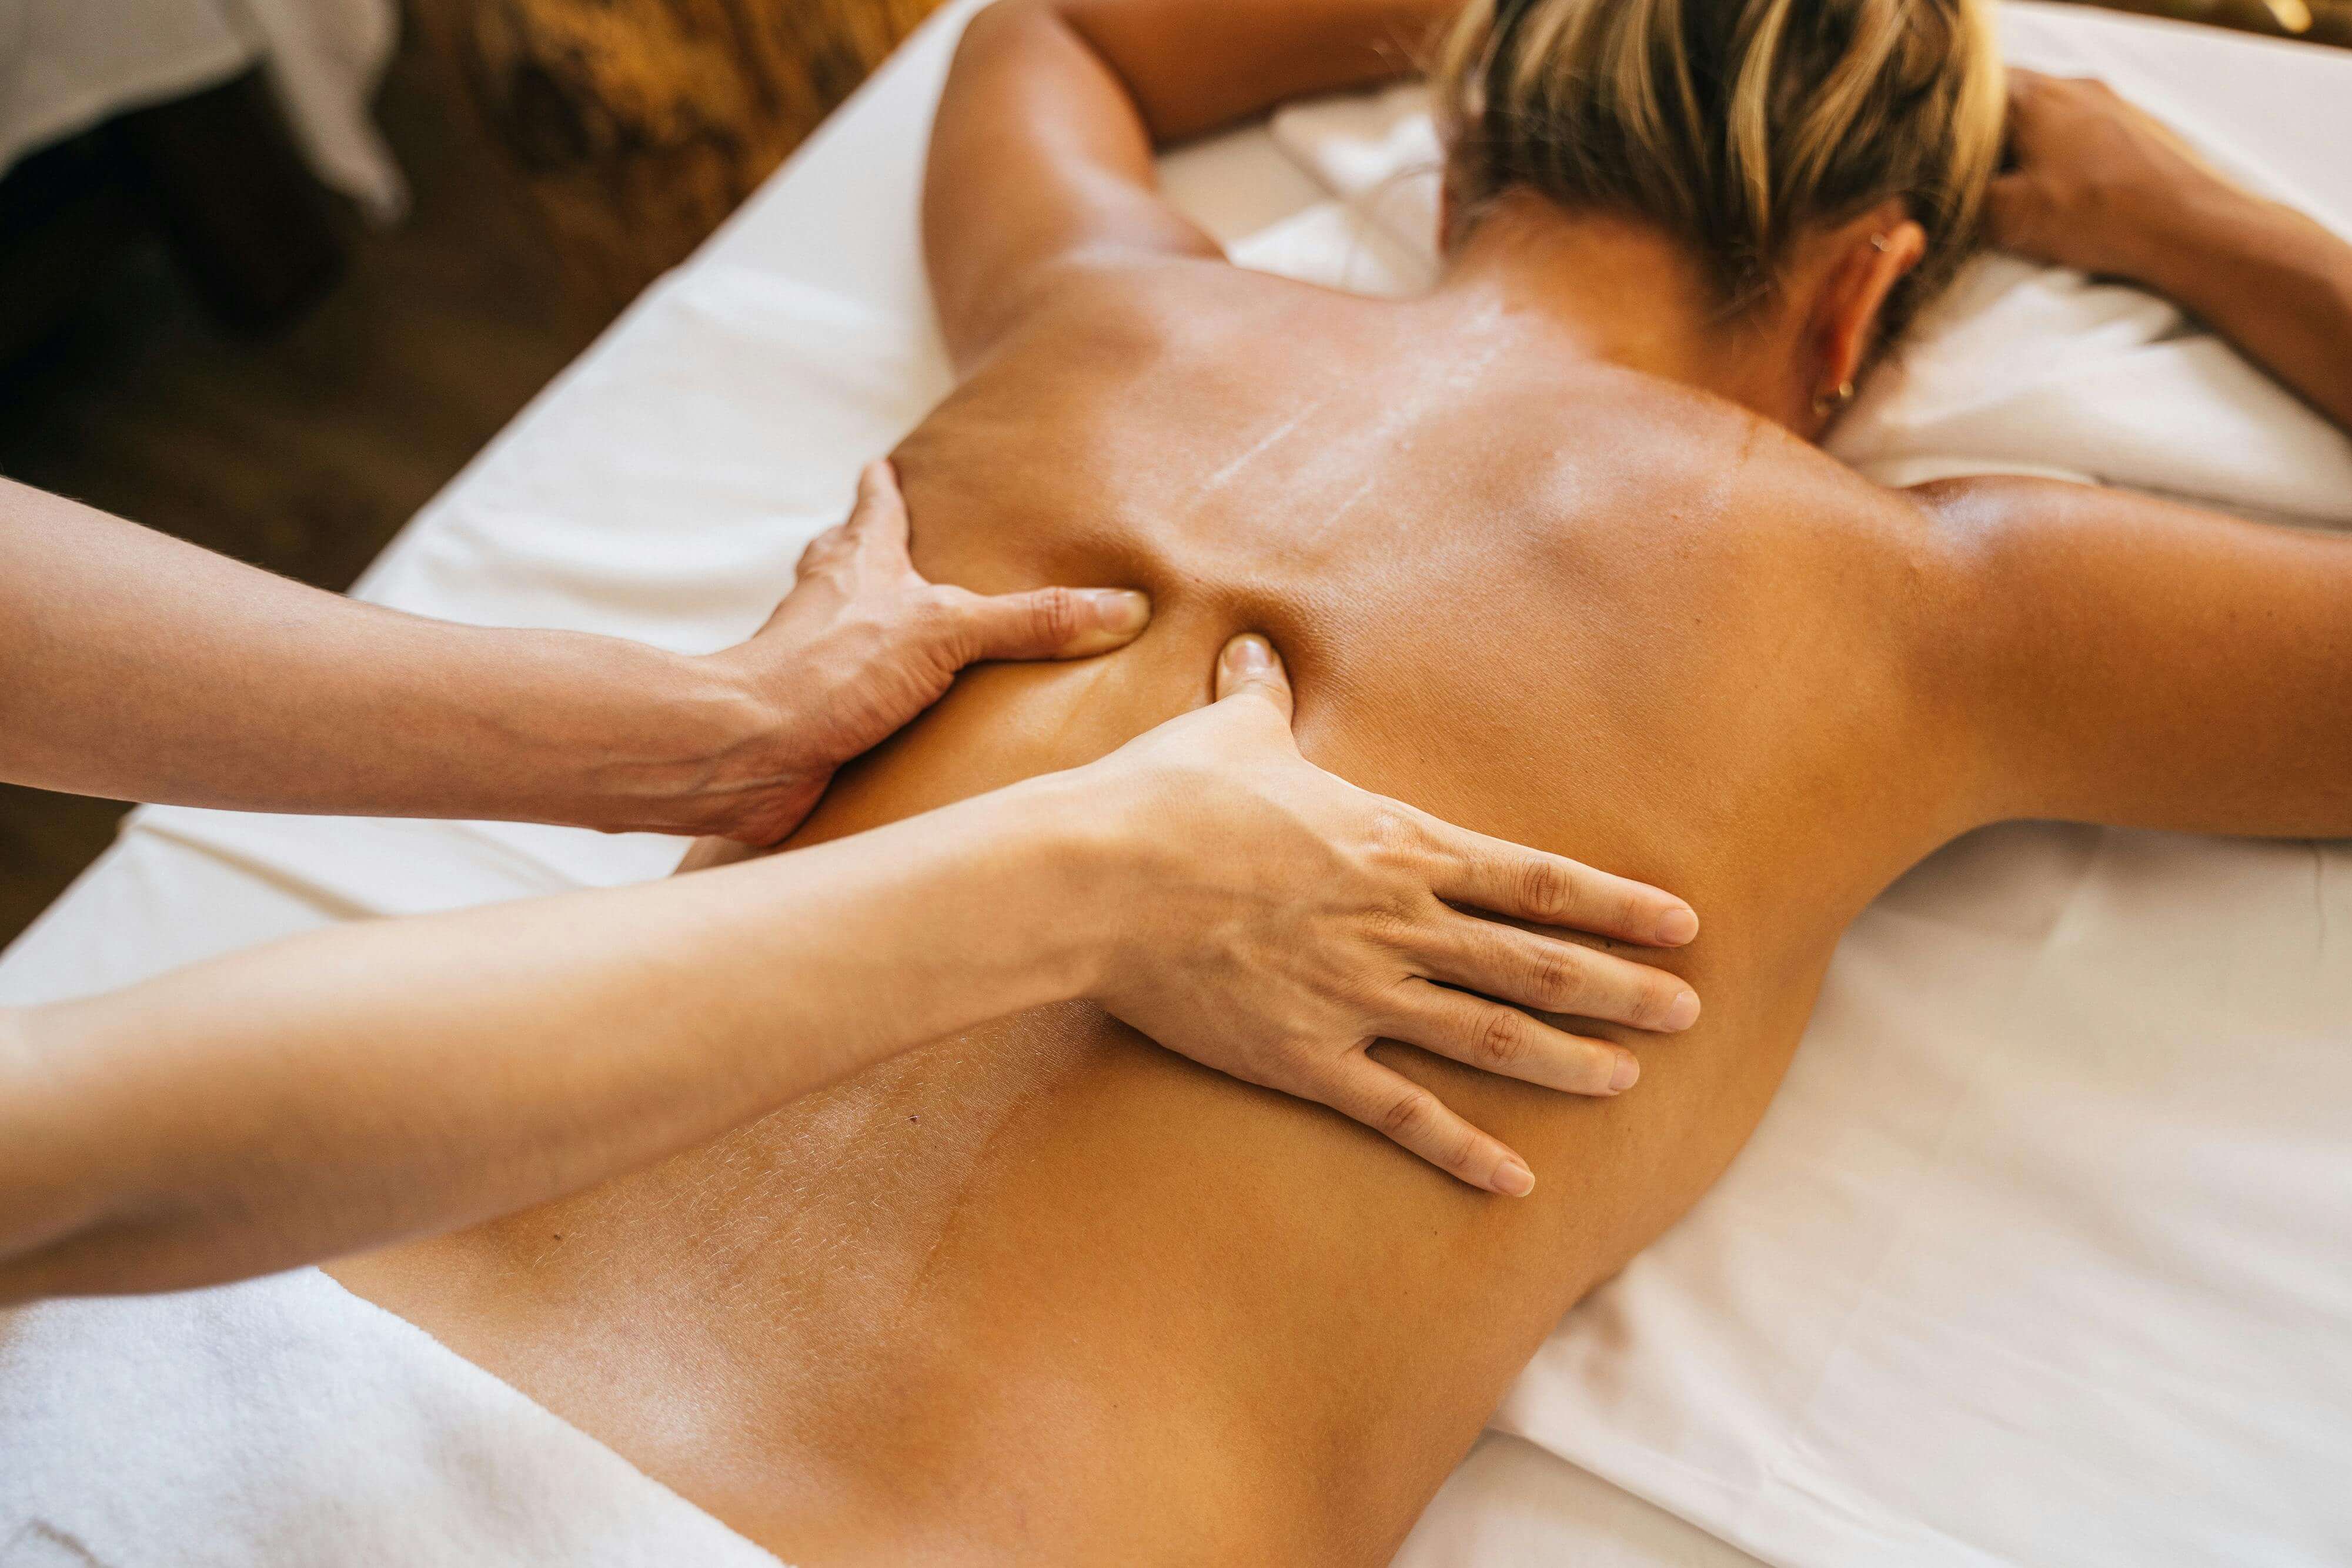 A man massaging a woman’s back